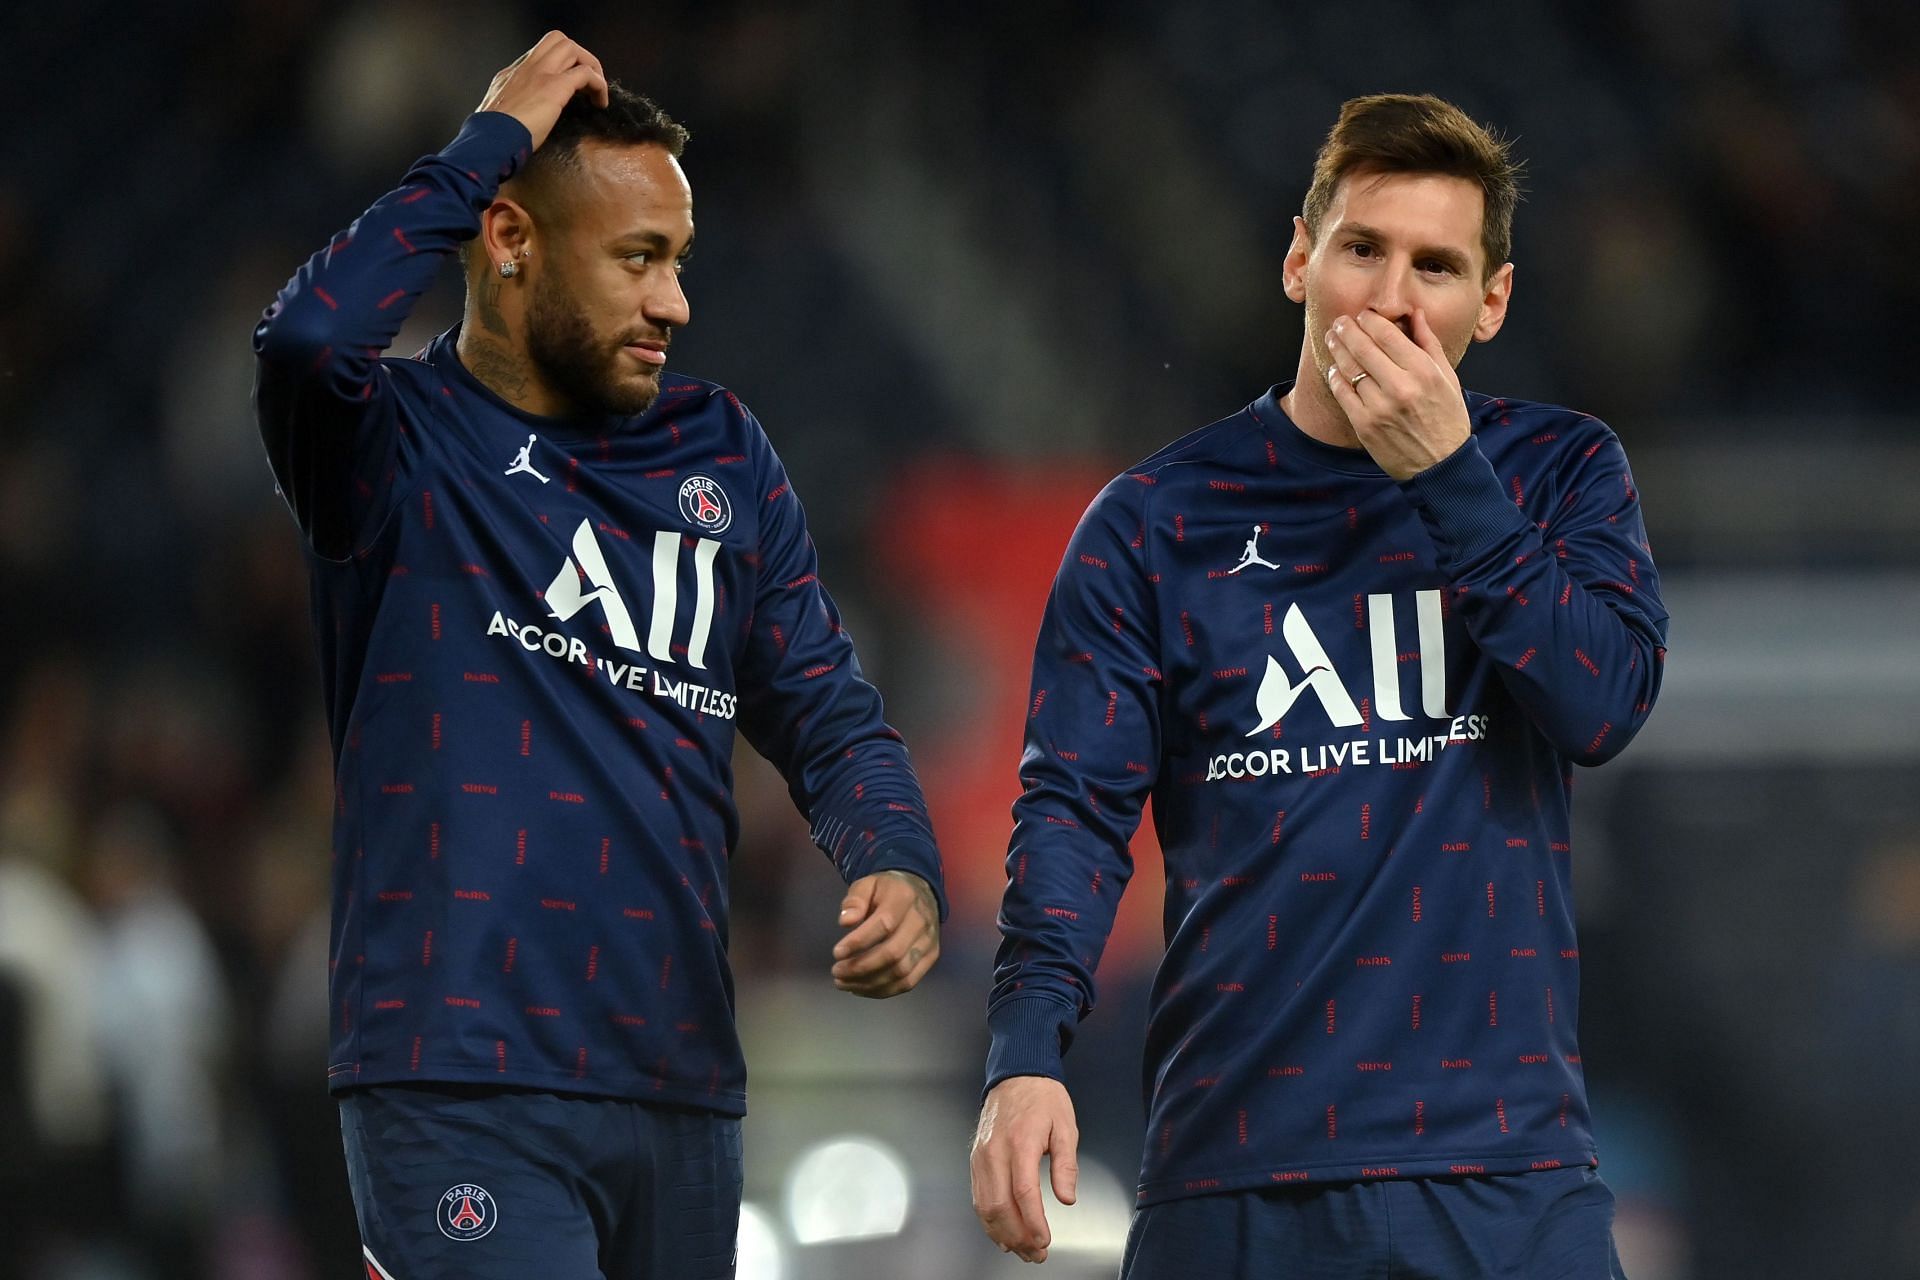 Lionel Messi is reunited with Neymar this season at Paris Saint-Germain